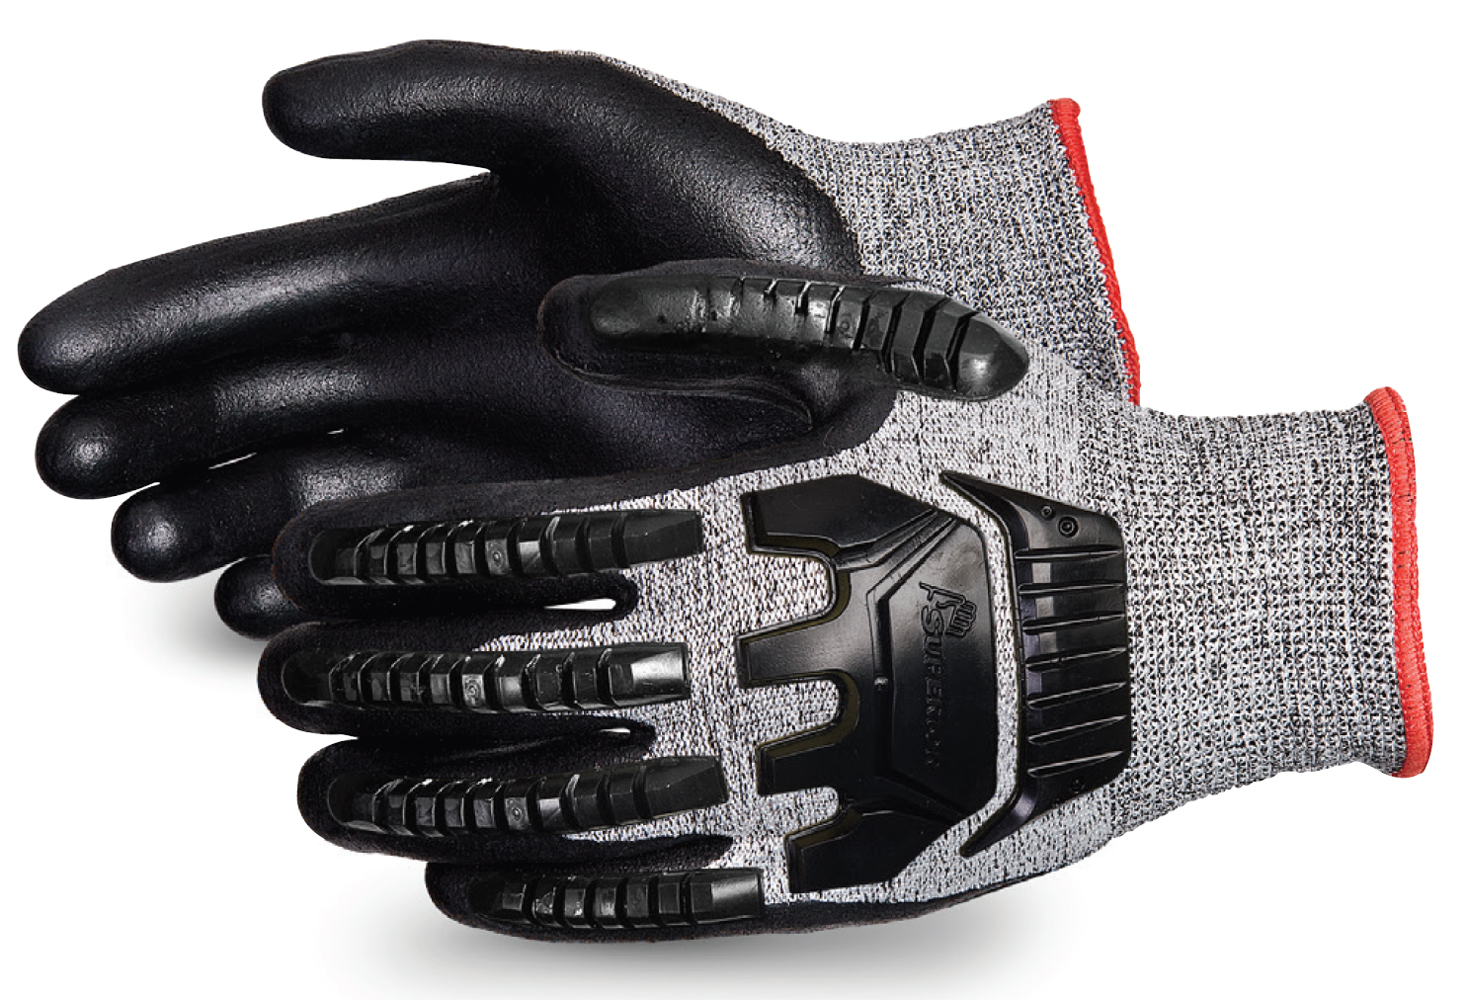 Superiorglove SUSTAFGFNVB TenActiv Anti-Impact Cut-Resistant Composite Knit Glove-0